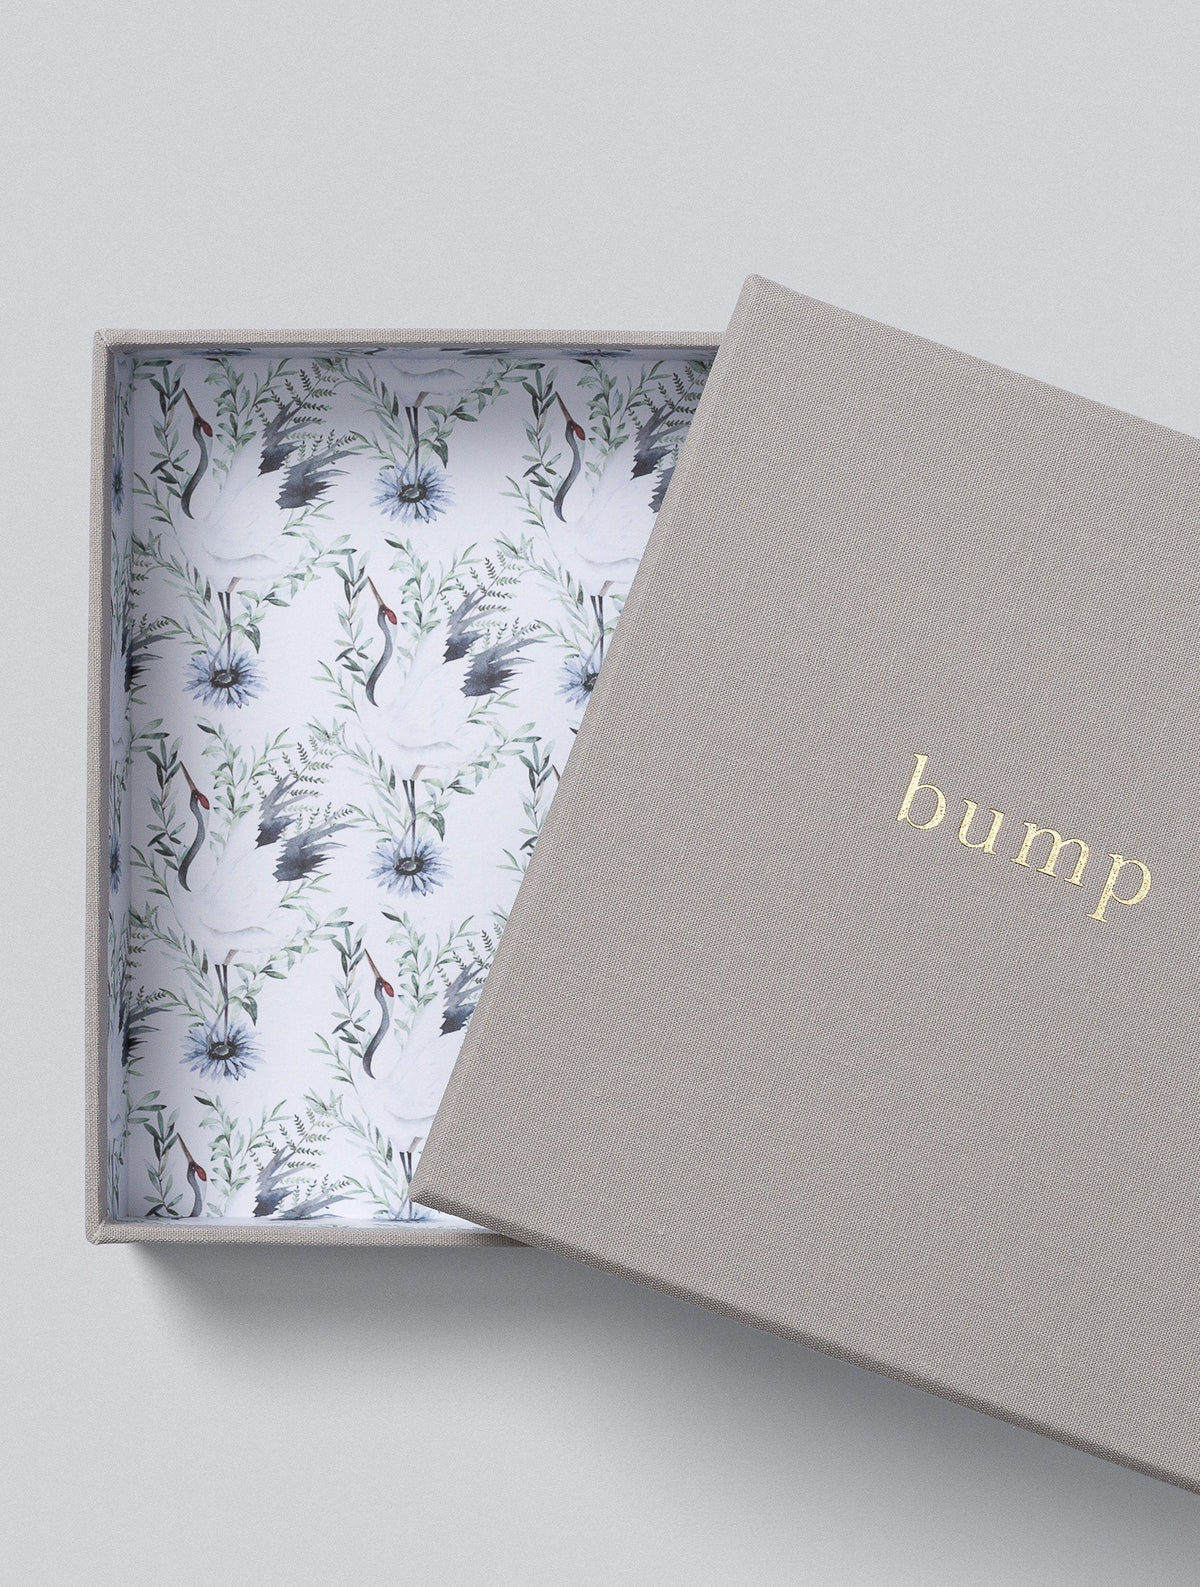 Bump. My Pregnancy Journal. Light Grey